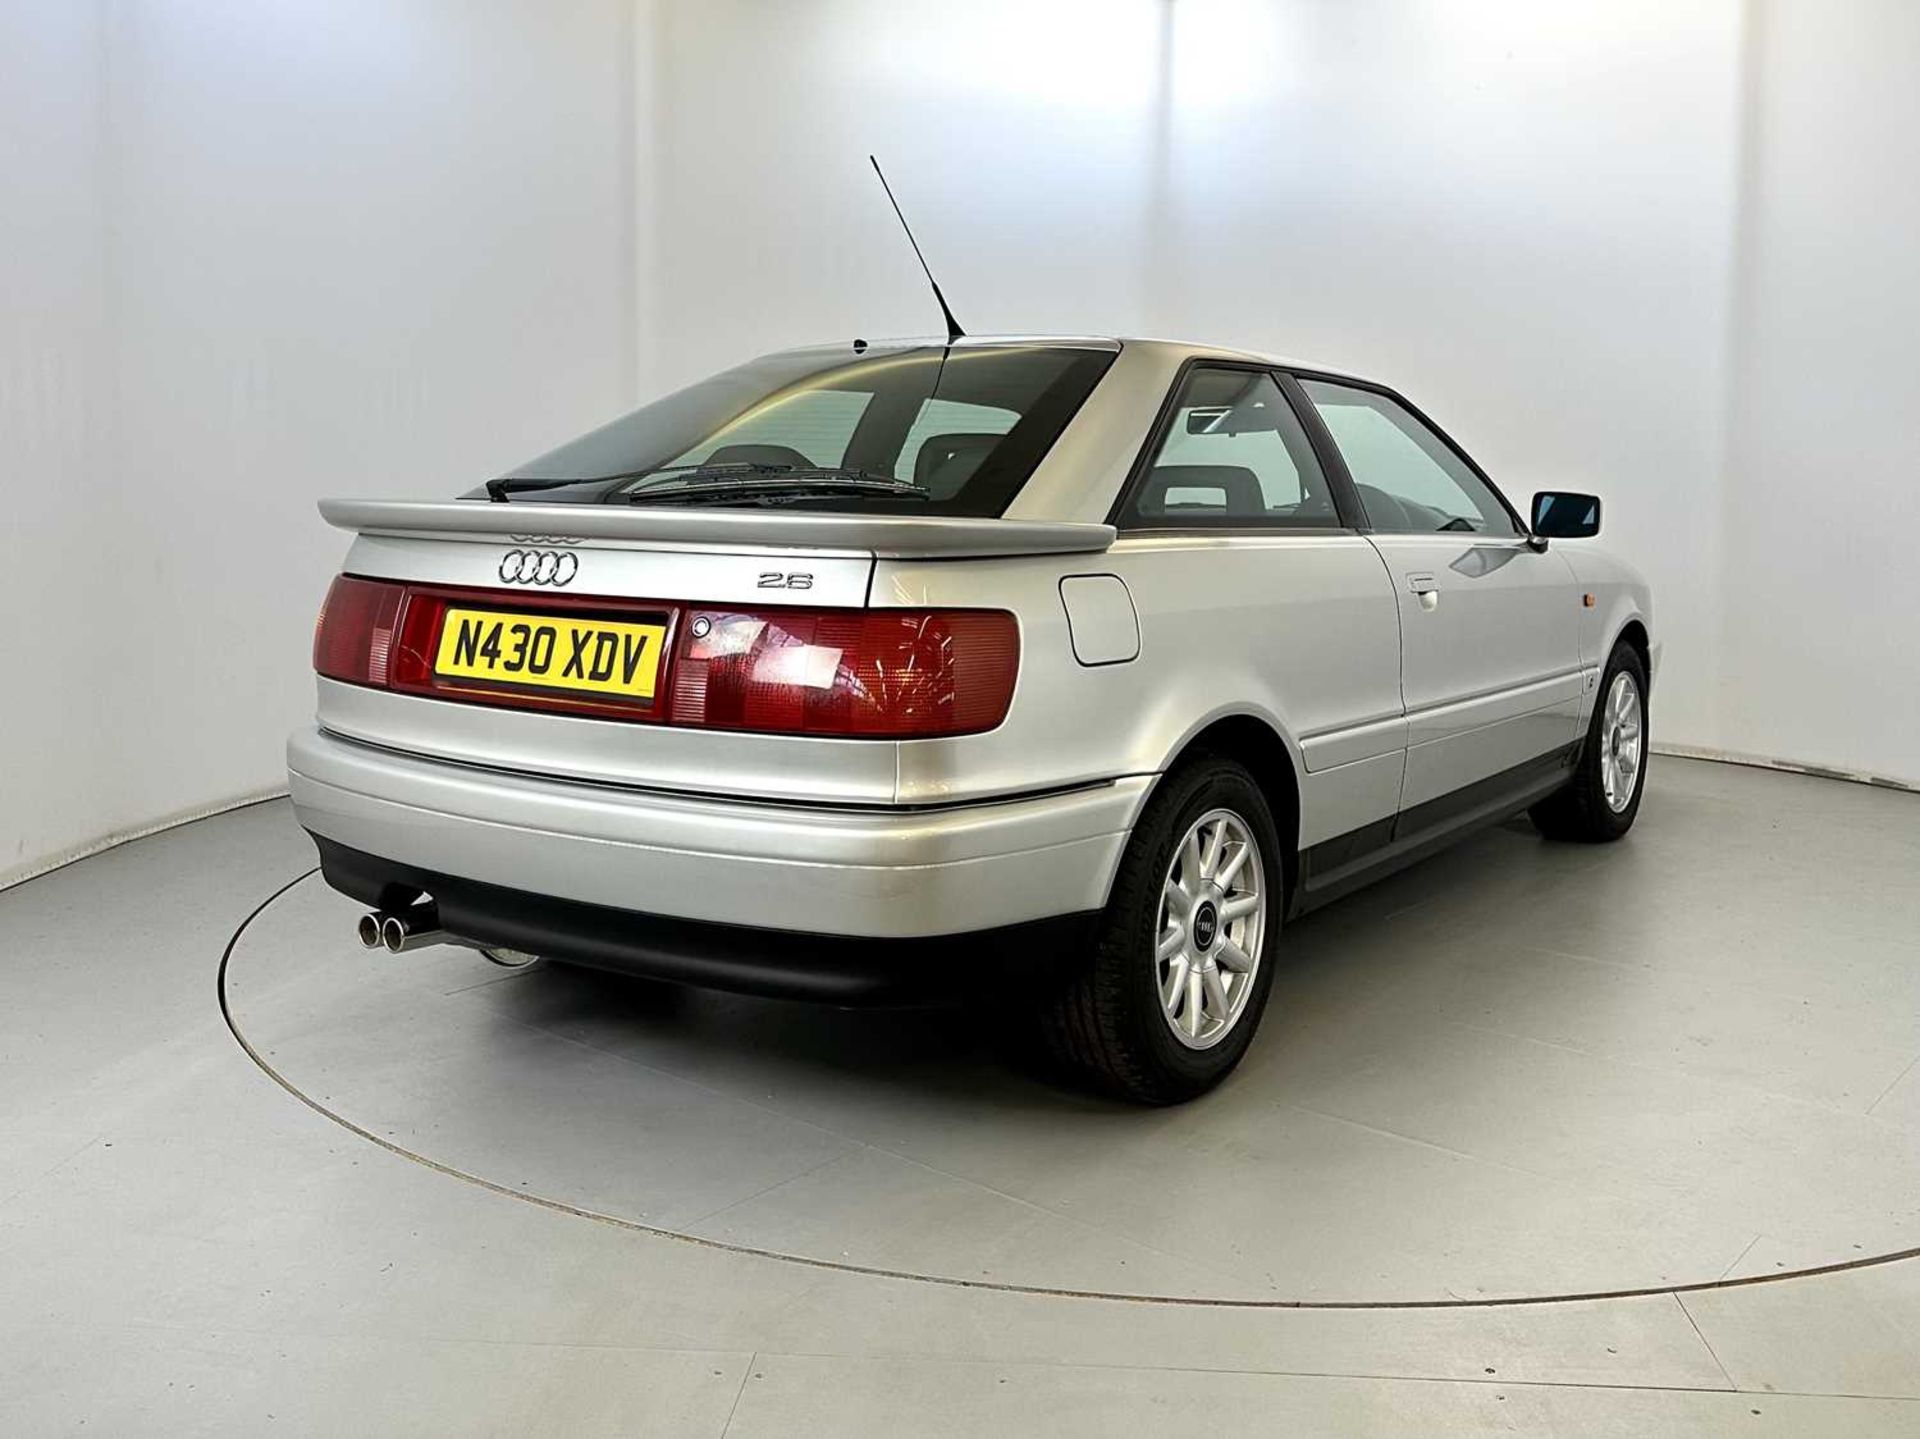 1995 Audi 80 Coupe V6 - Image 9 of 30